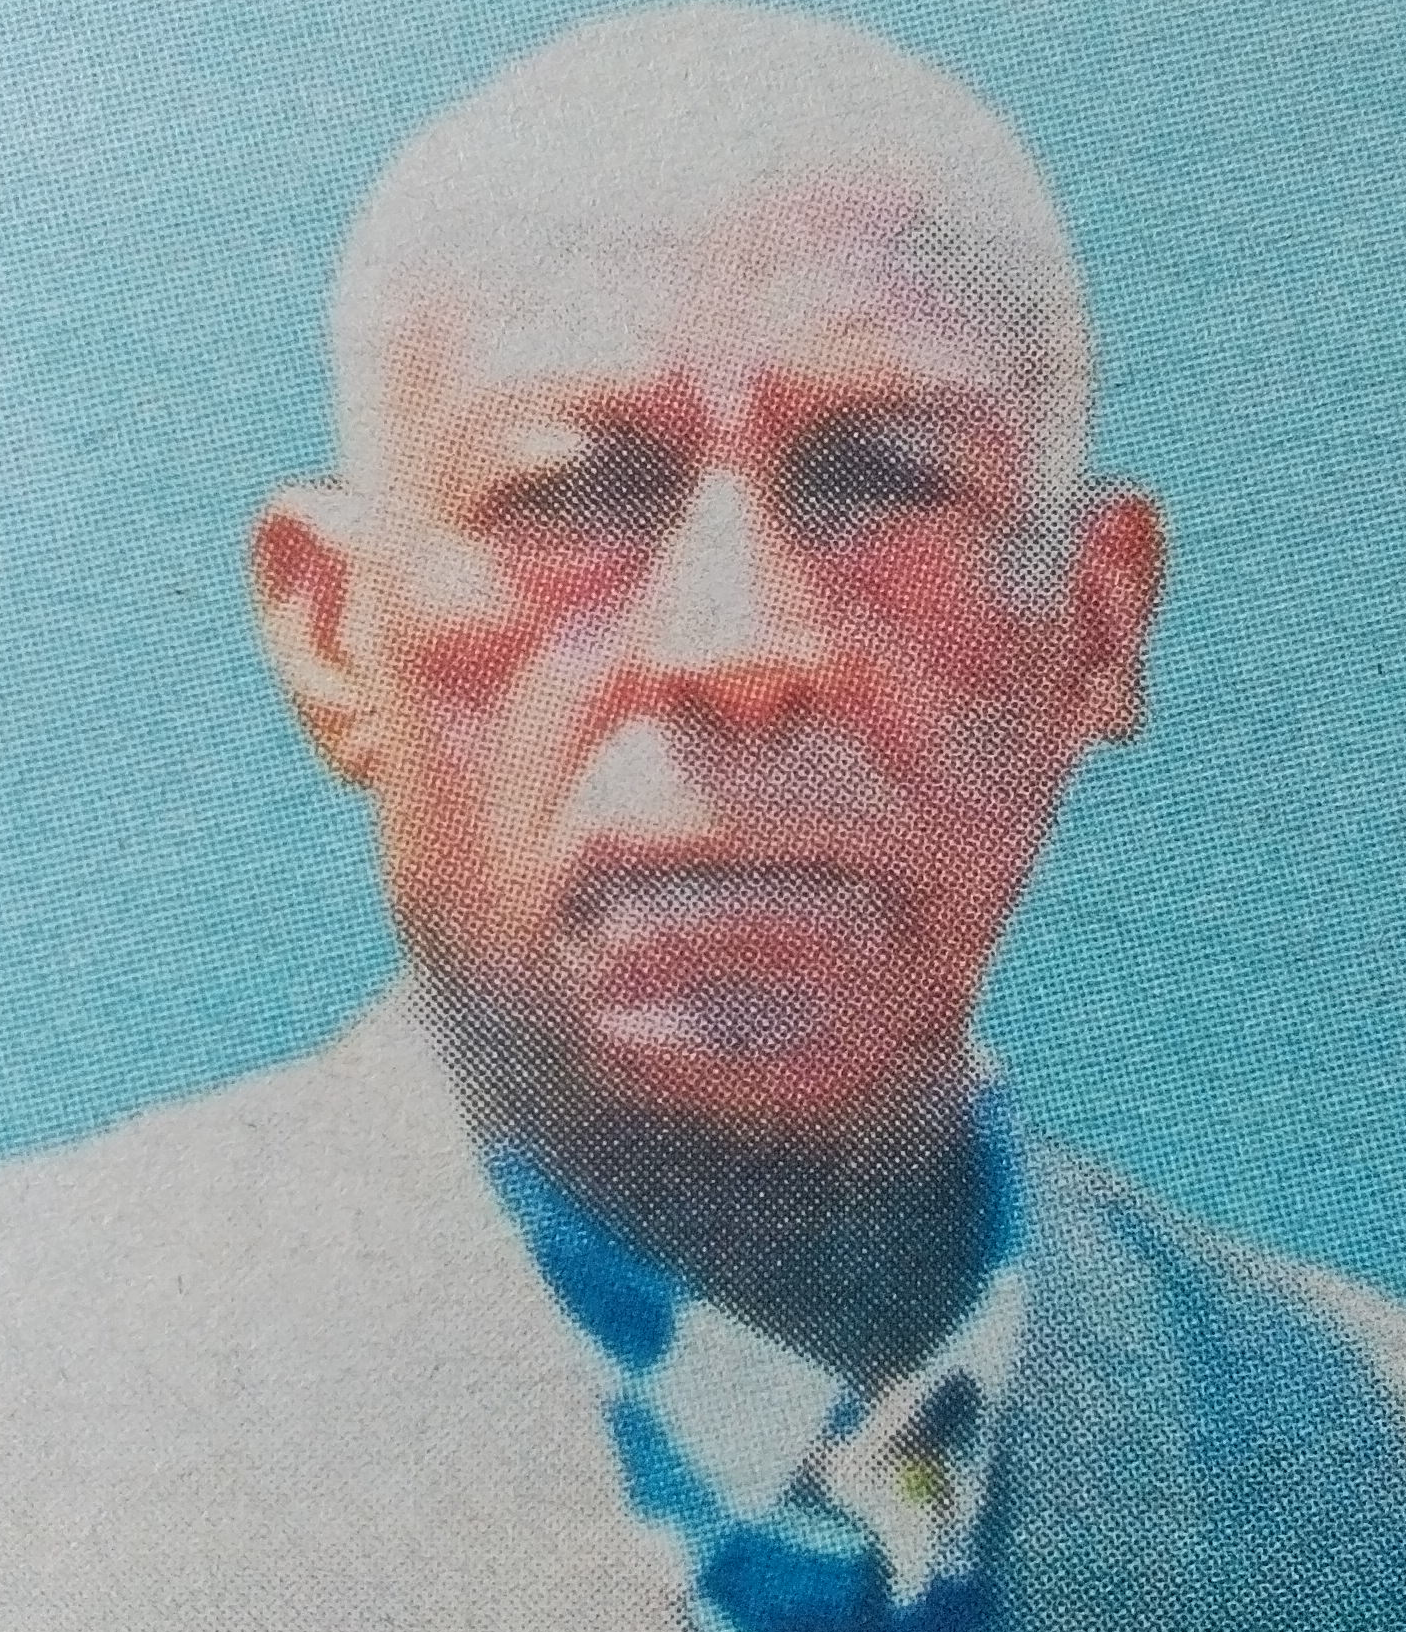 Obituary Image of Mzee Choggi Thotho Kiarie